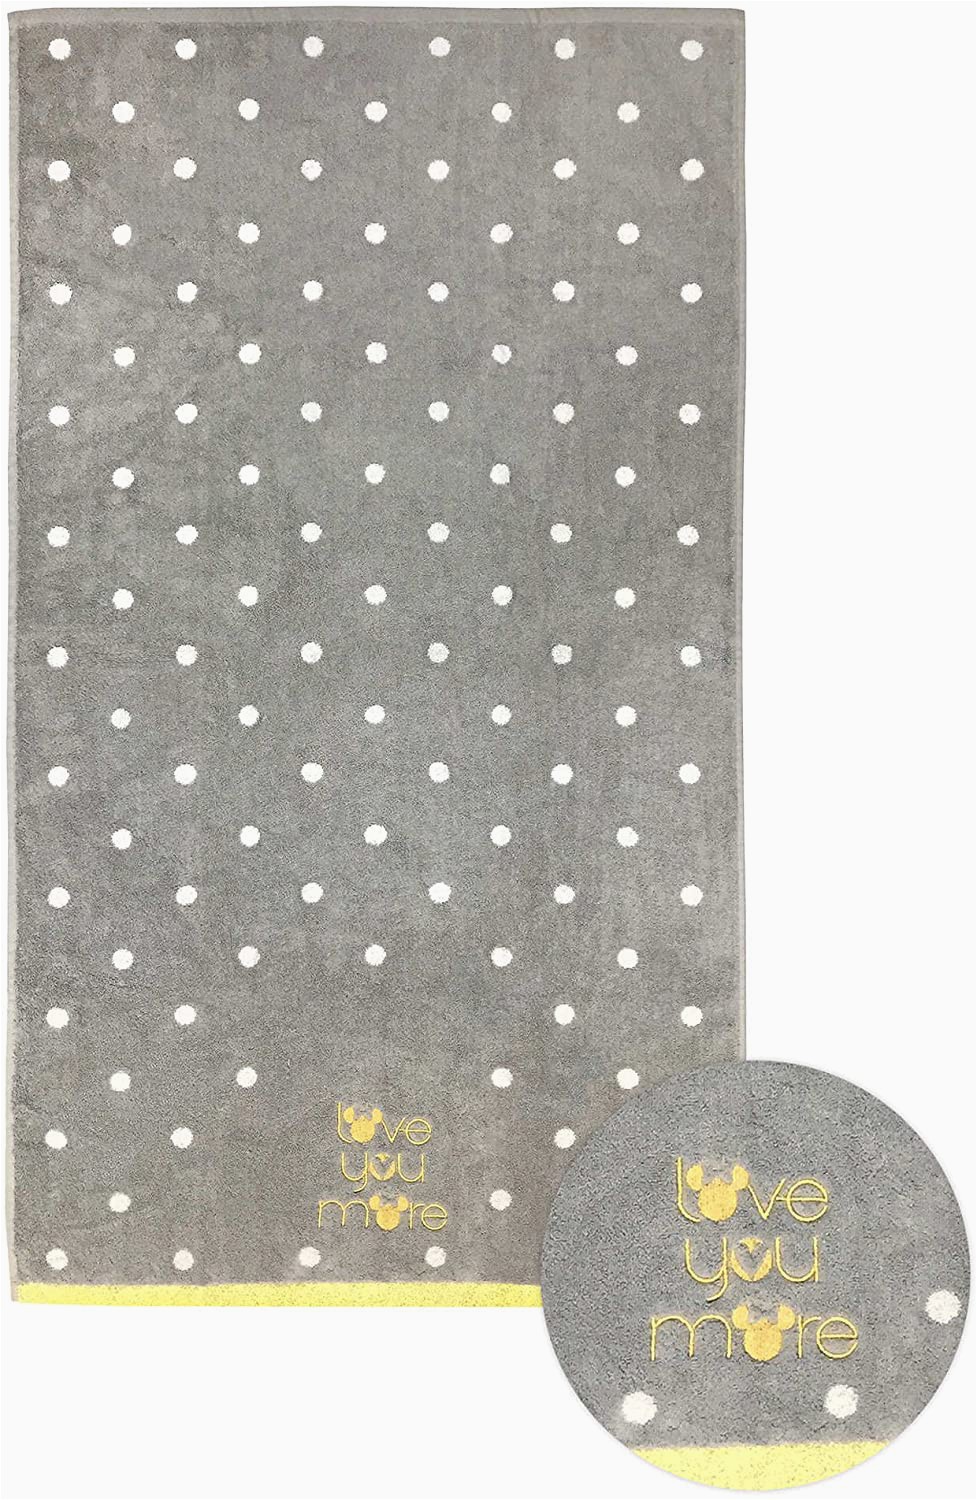 Minnie Mouse Bathroom Rug Minnie Mouse Disney Elegant and Stylish White Gold and Grey Bath Rug Collection Bath towel